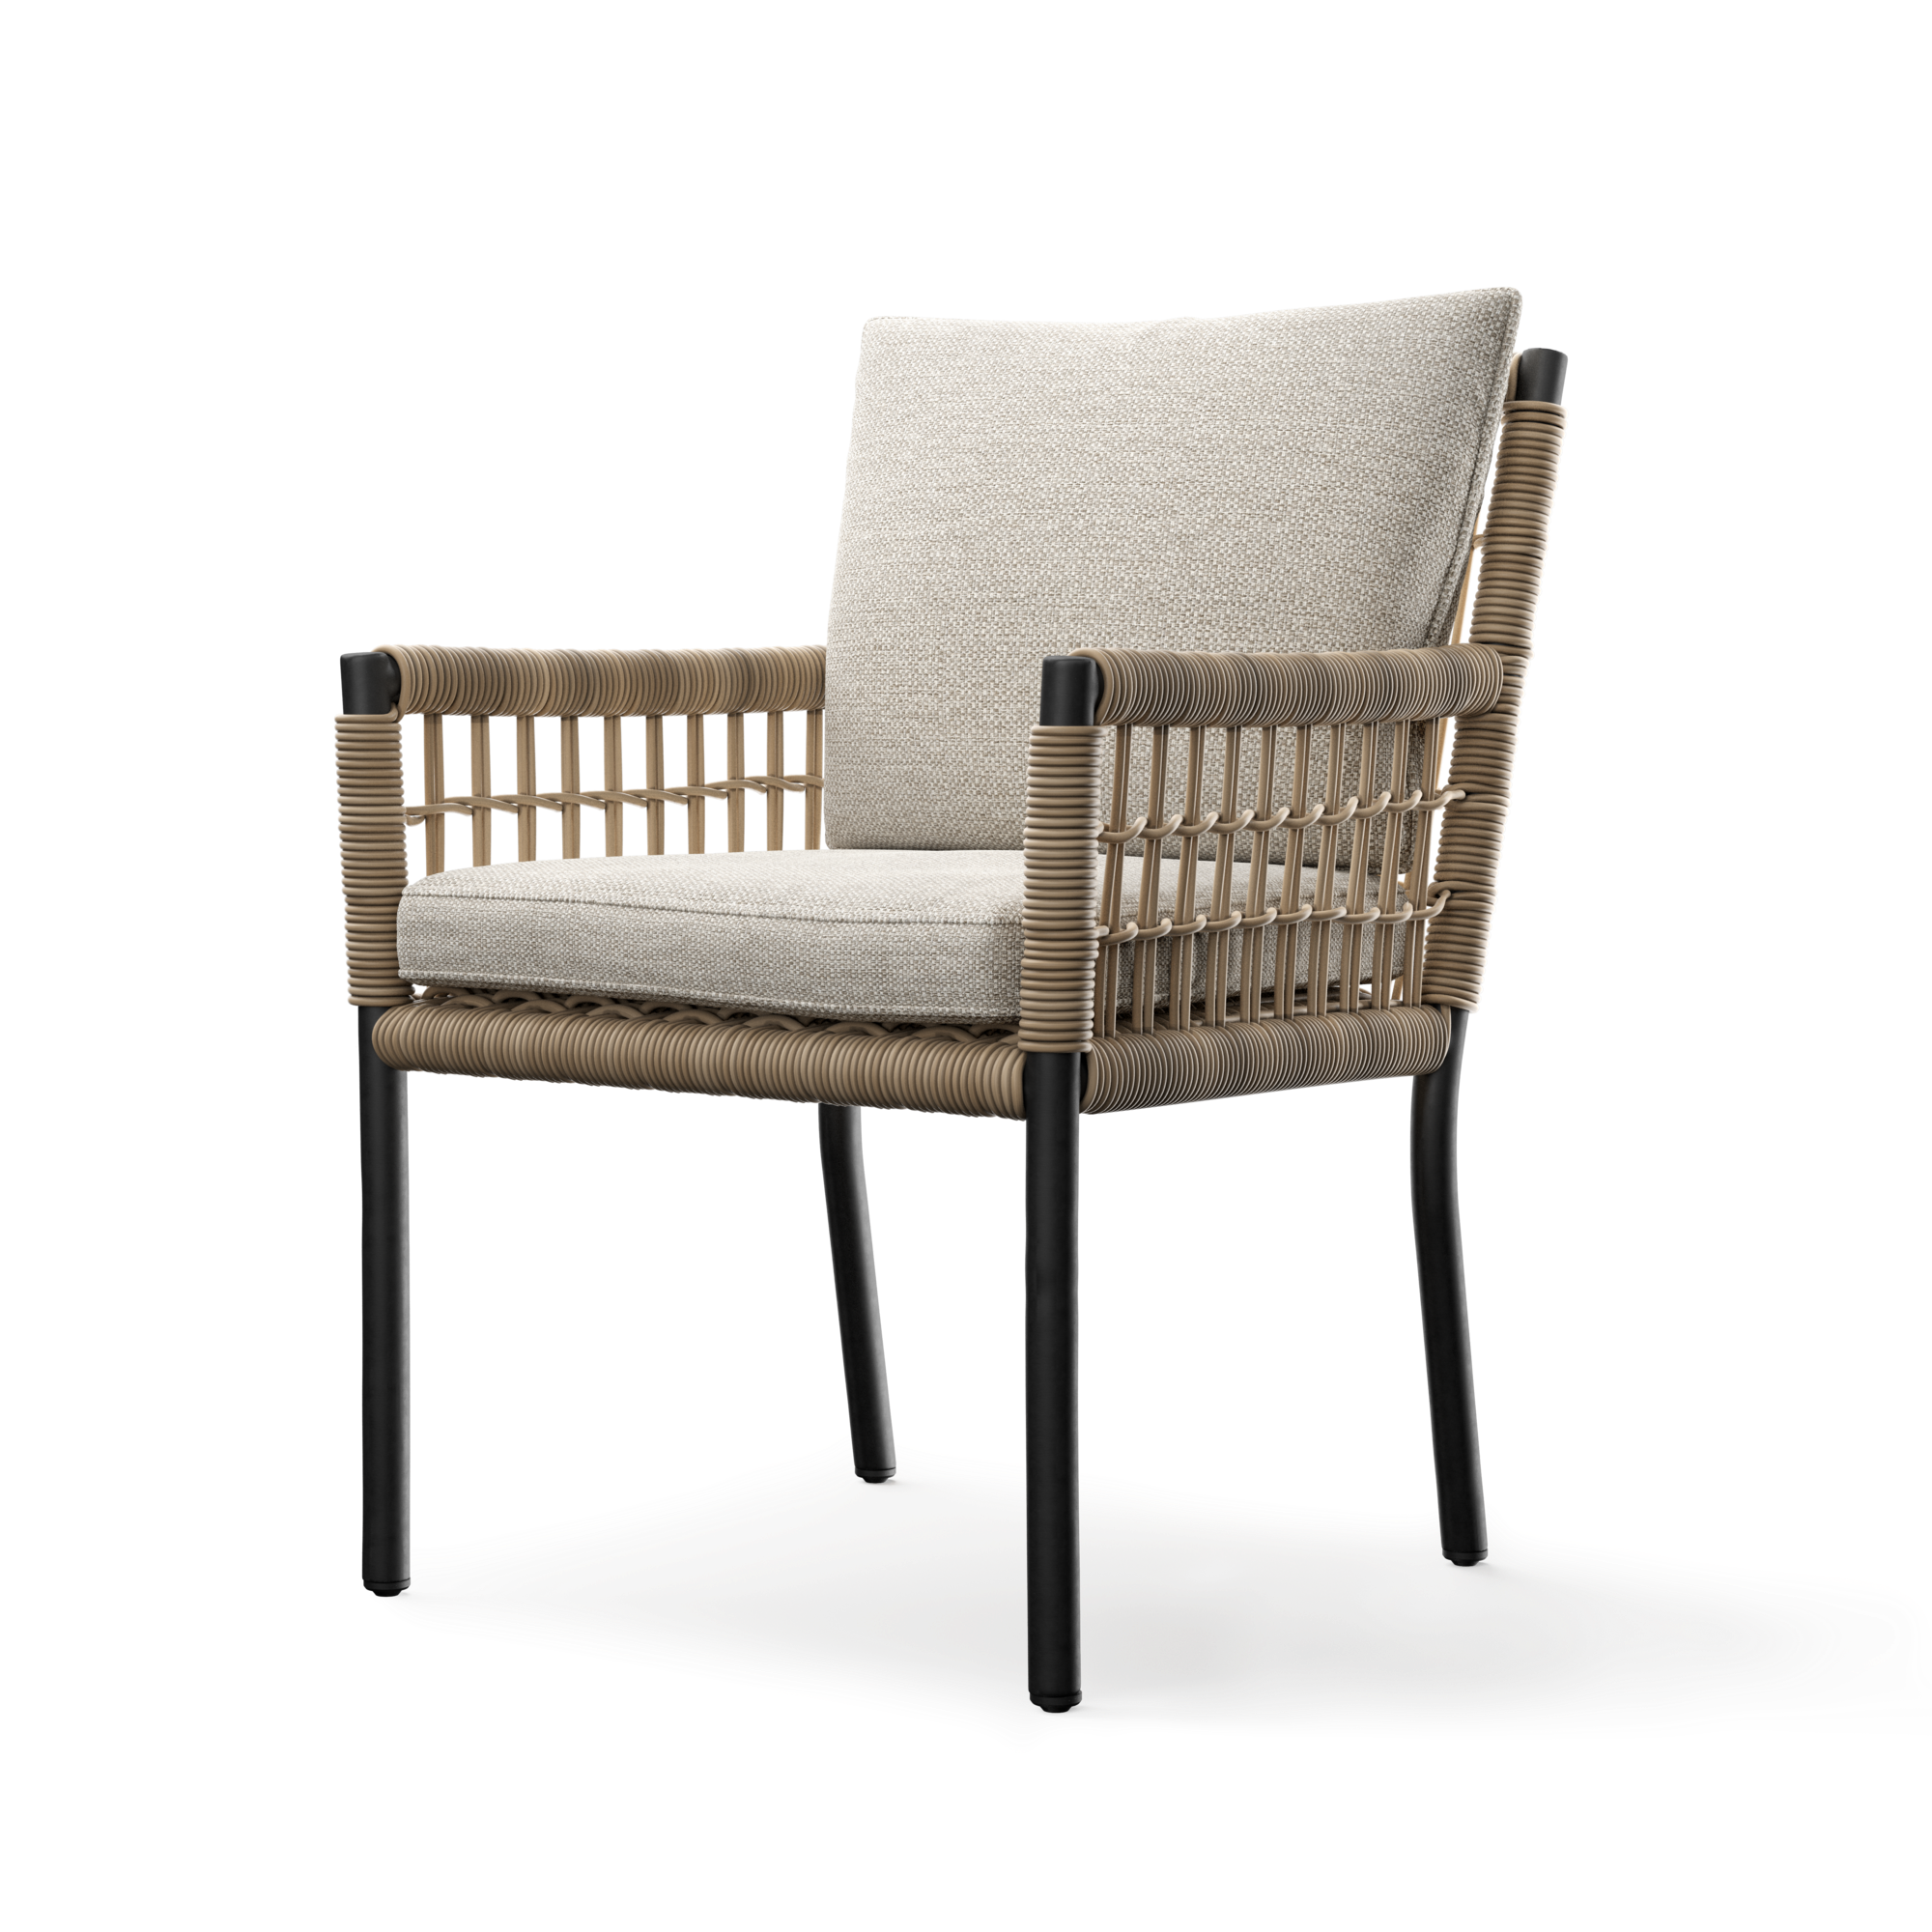 Lazio dining chair